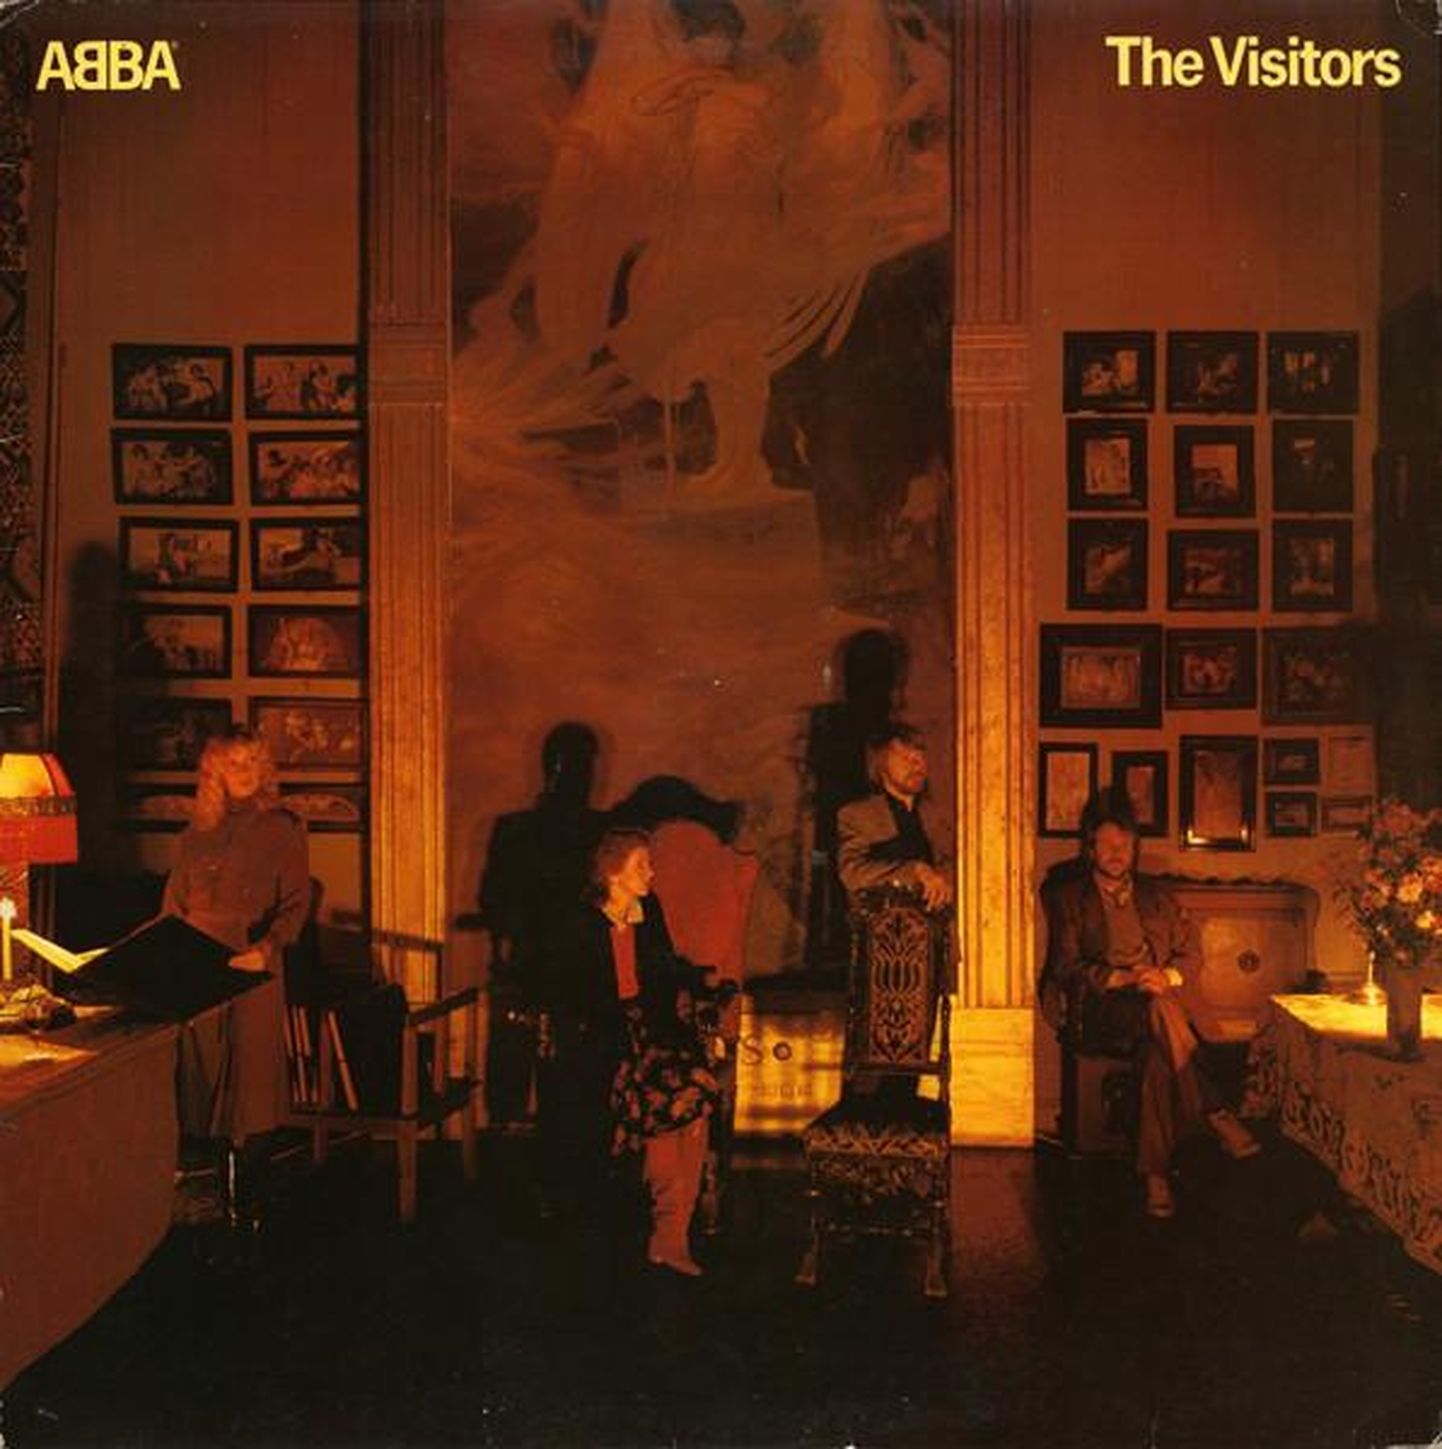 ABBA albumi «The Visitors» esikaas.